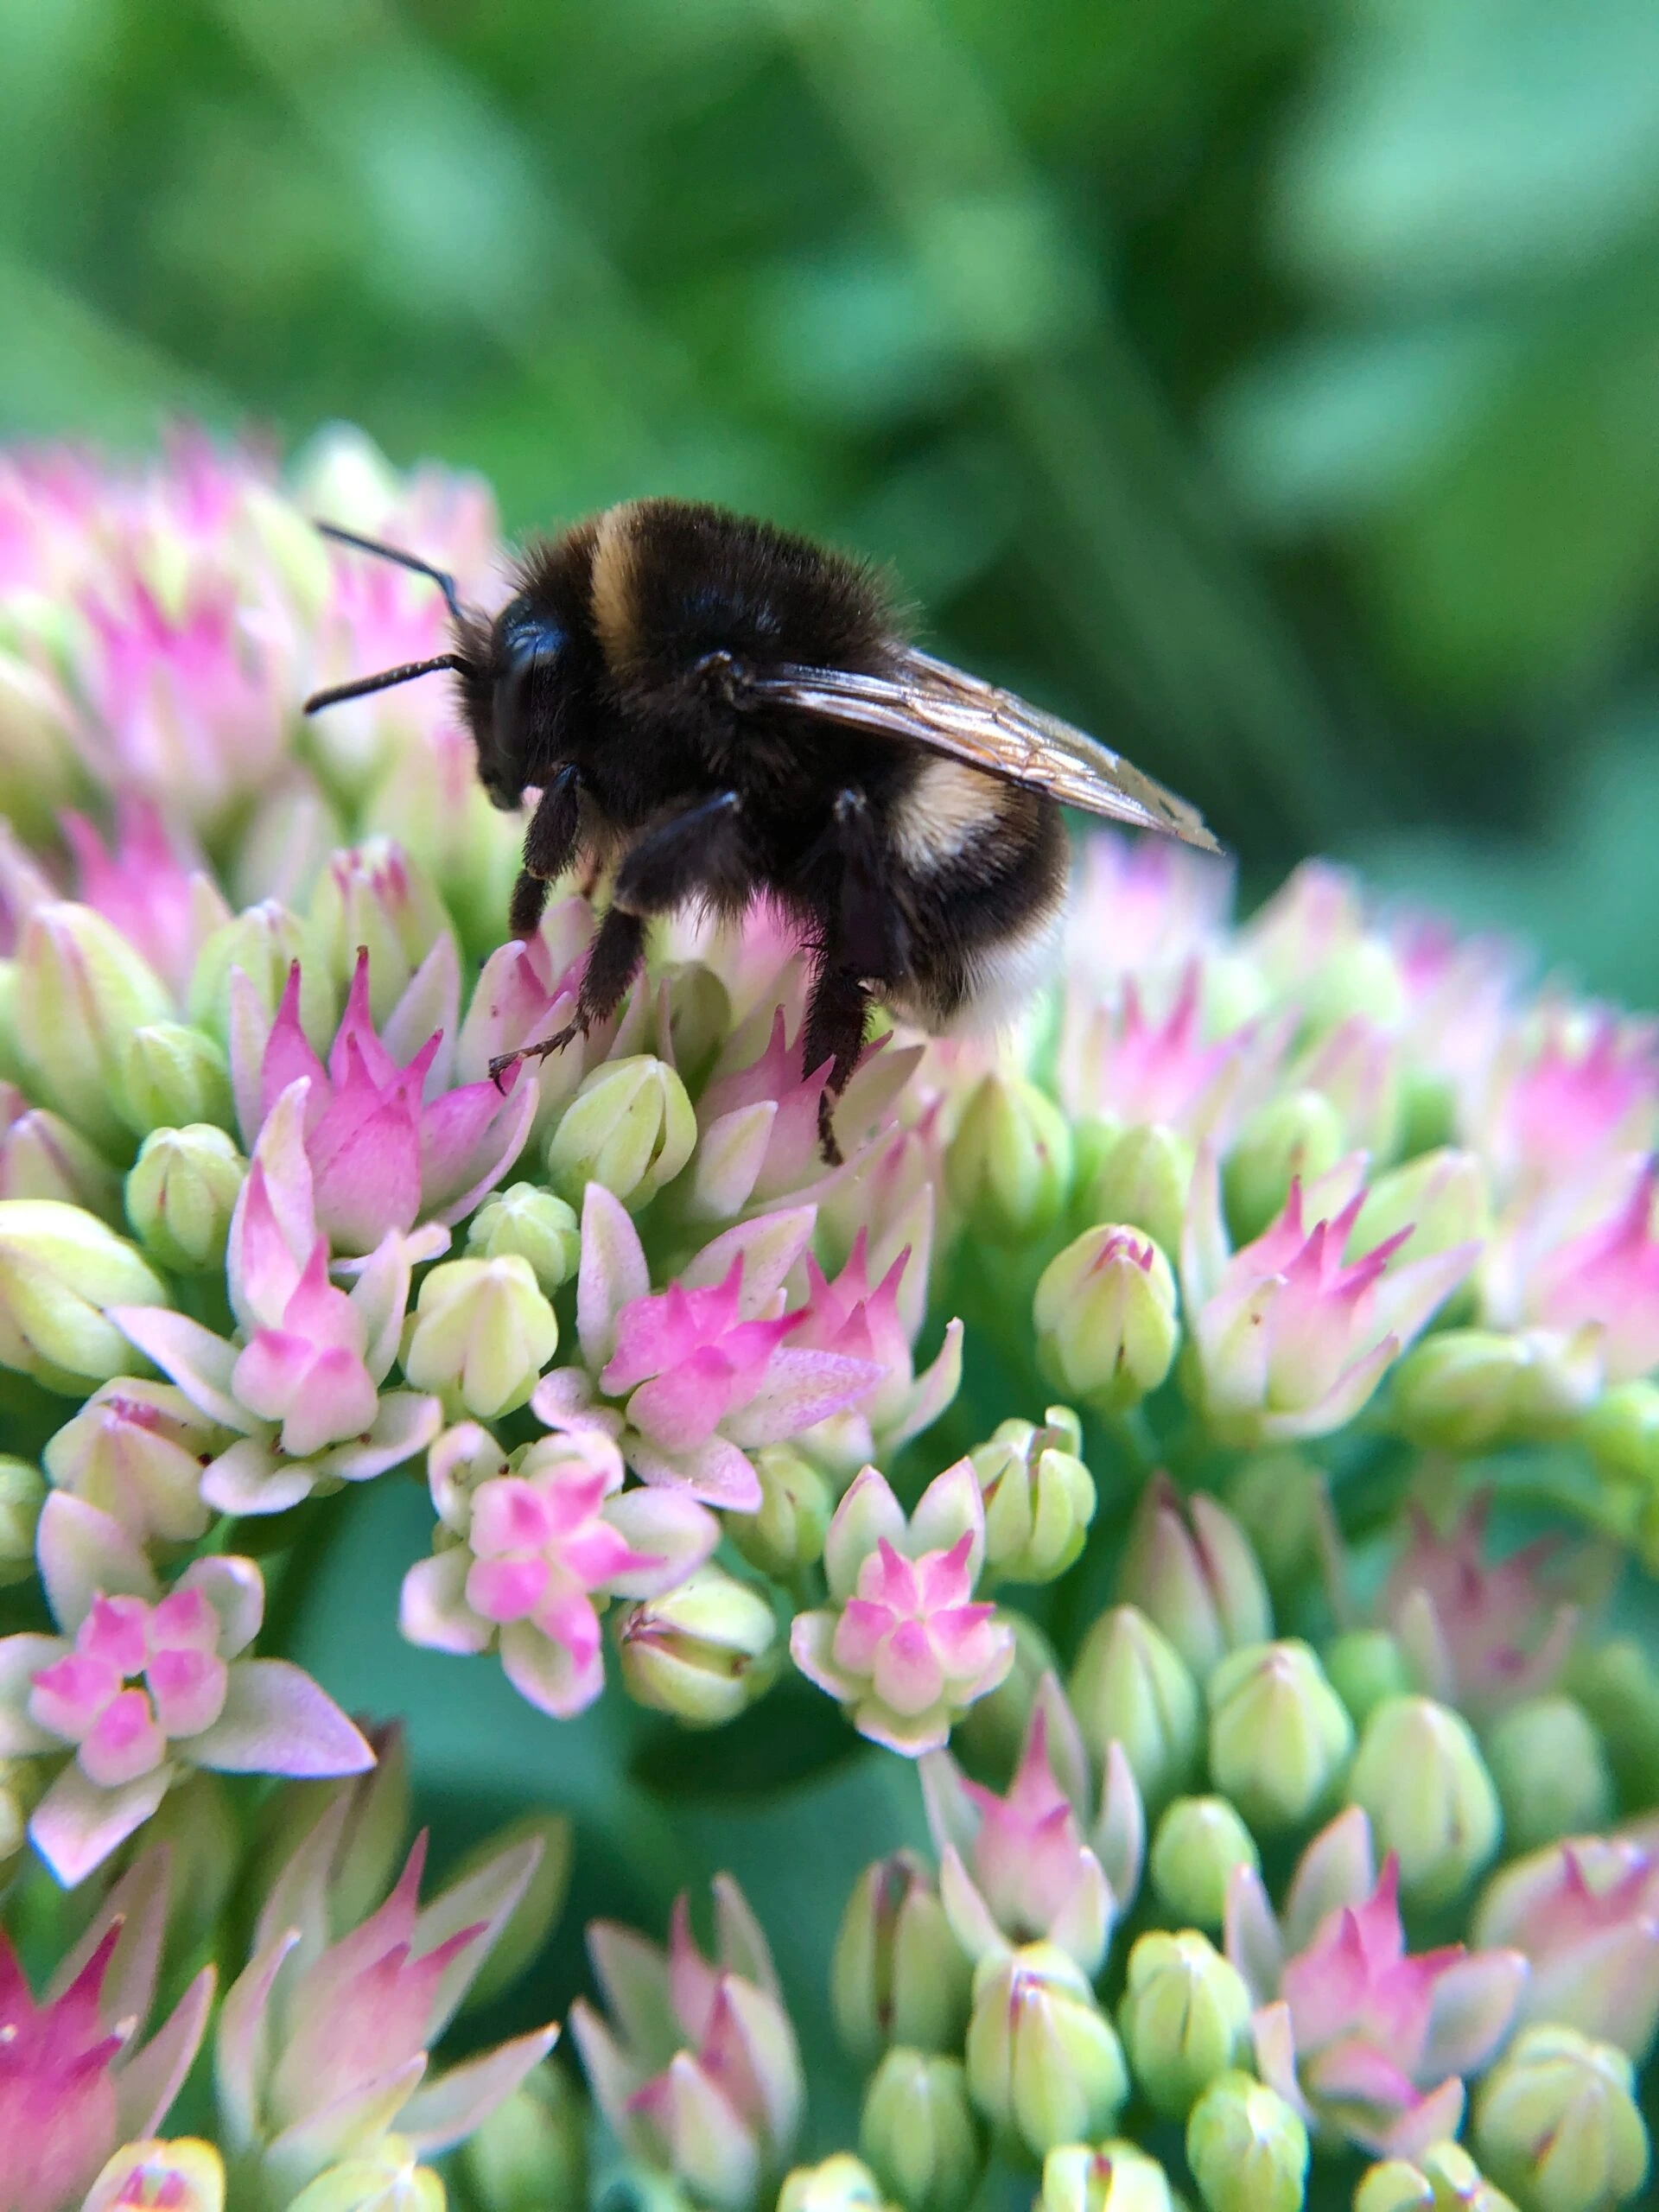 neil-harvey-Honey Bee up close on flower petal collecting nectar-unsplash-